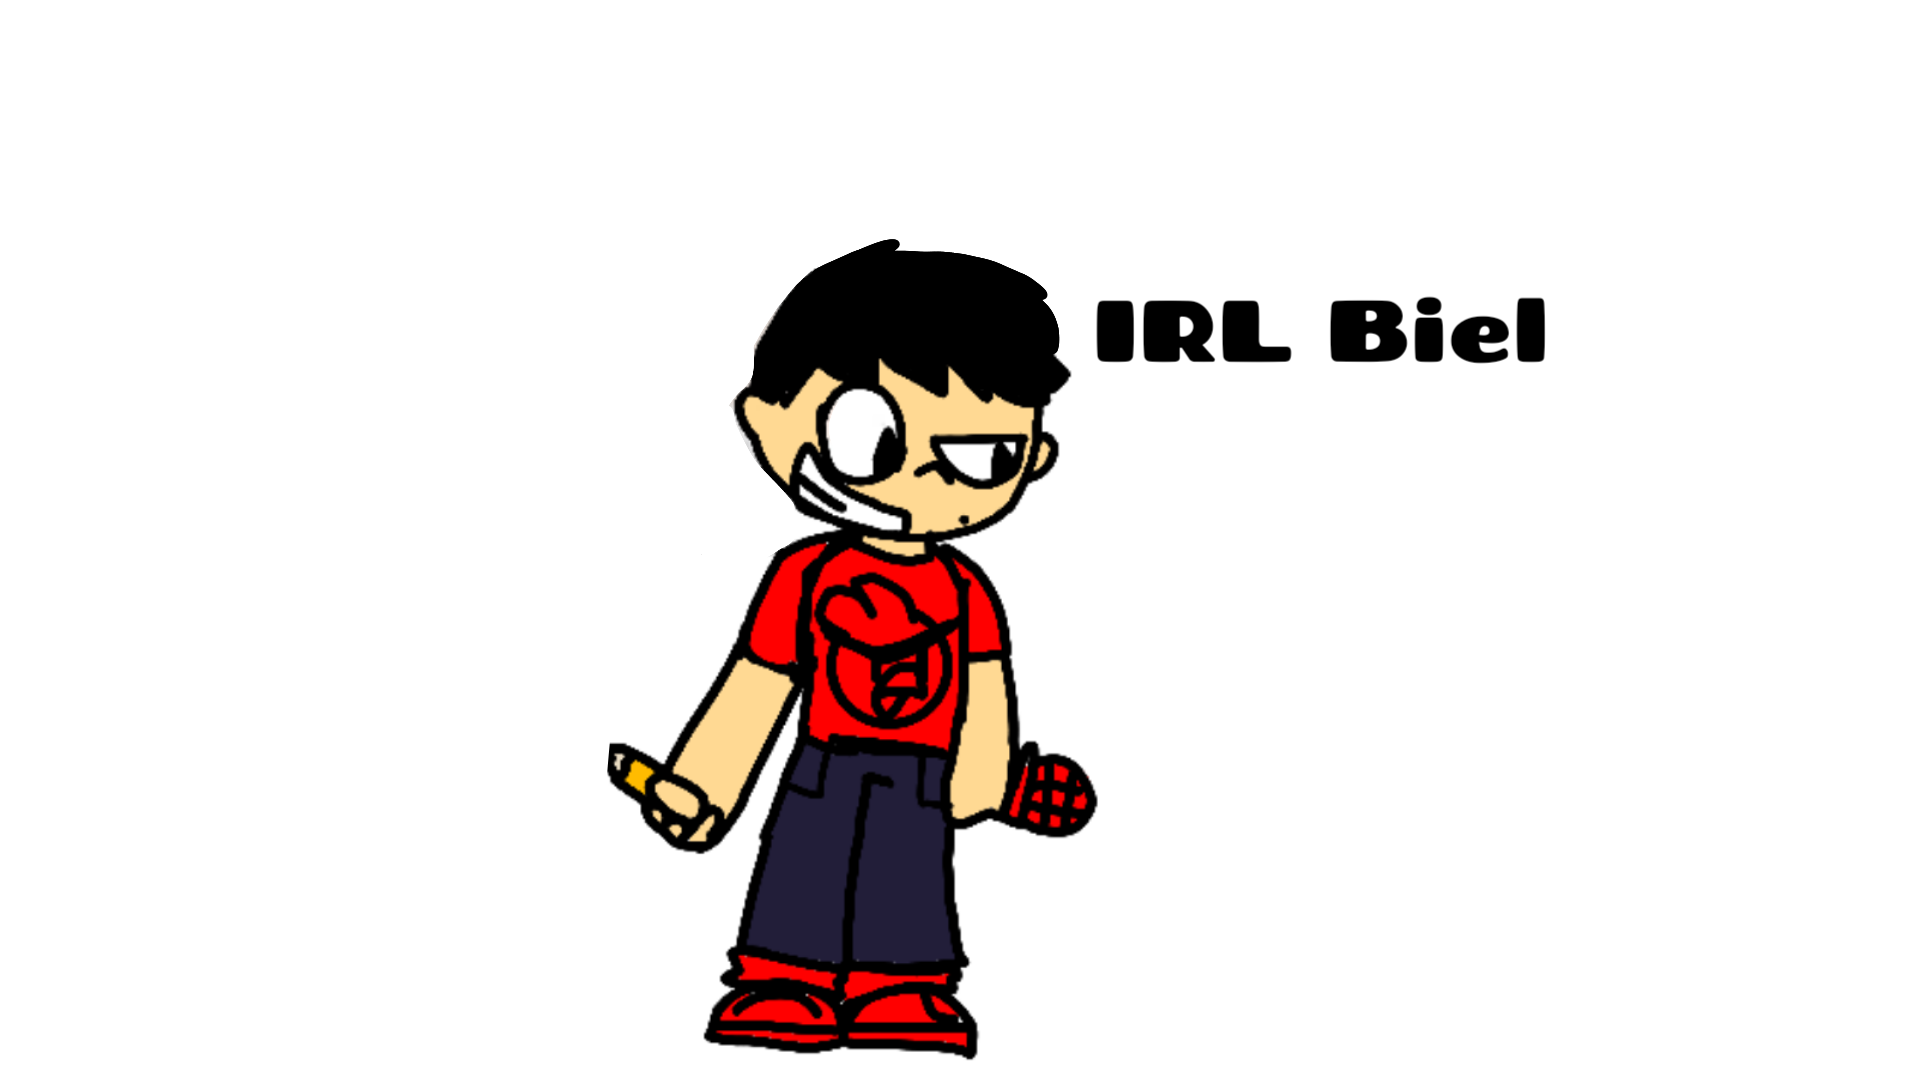 IRL biel (Me In life real/human) by Bielandfriends on DeviantArt